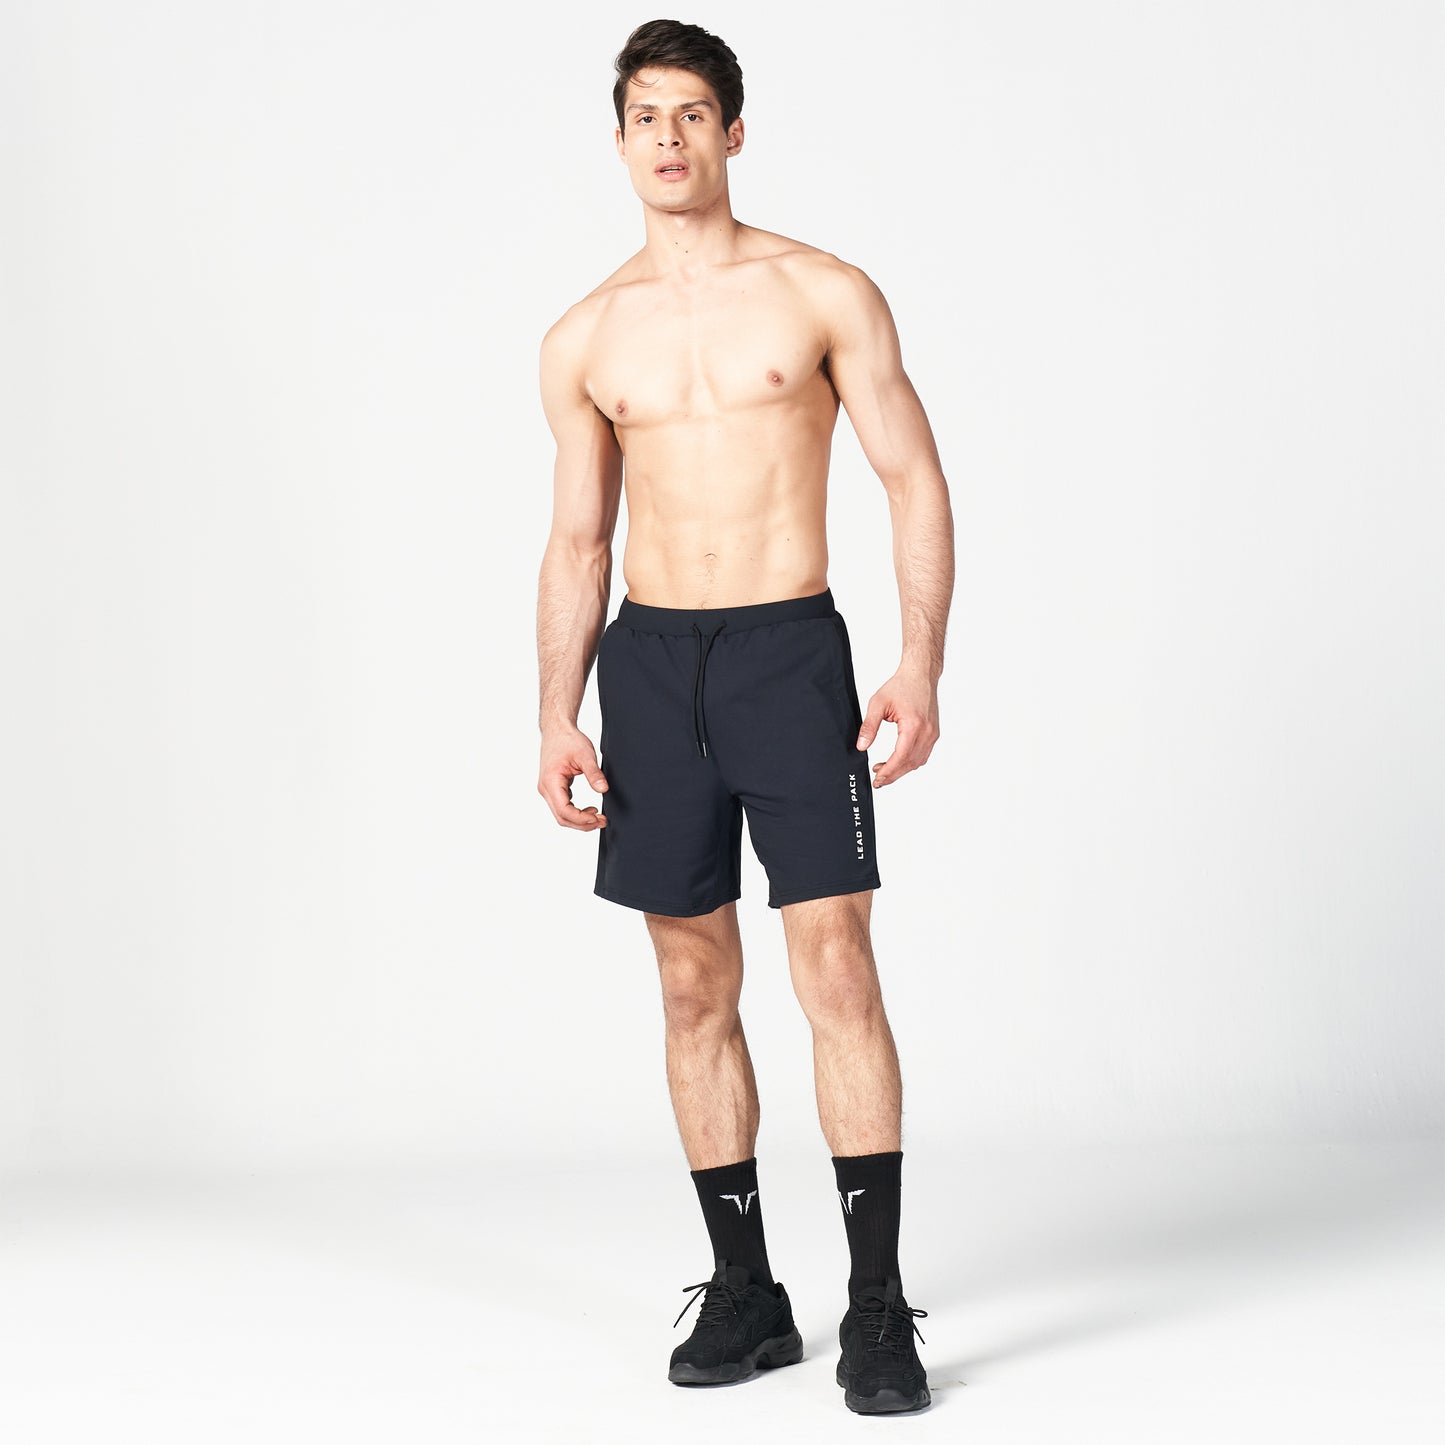 squatwolf-gym-wear-ribbed-flex-shorts-black-workout-short-for-men